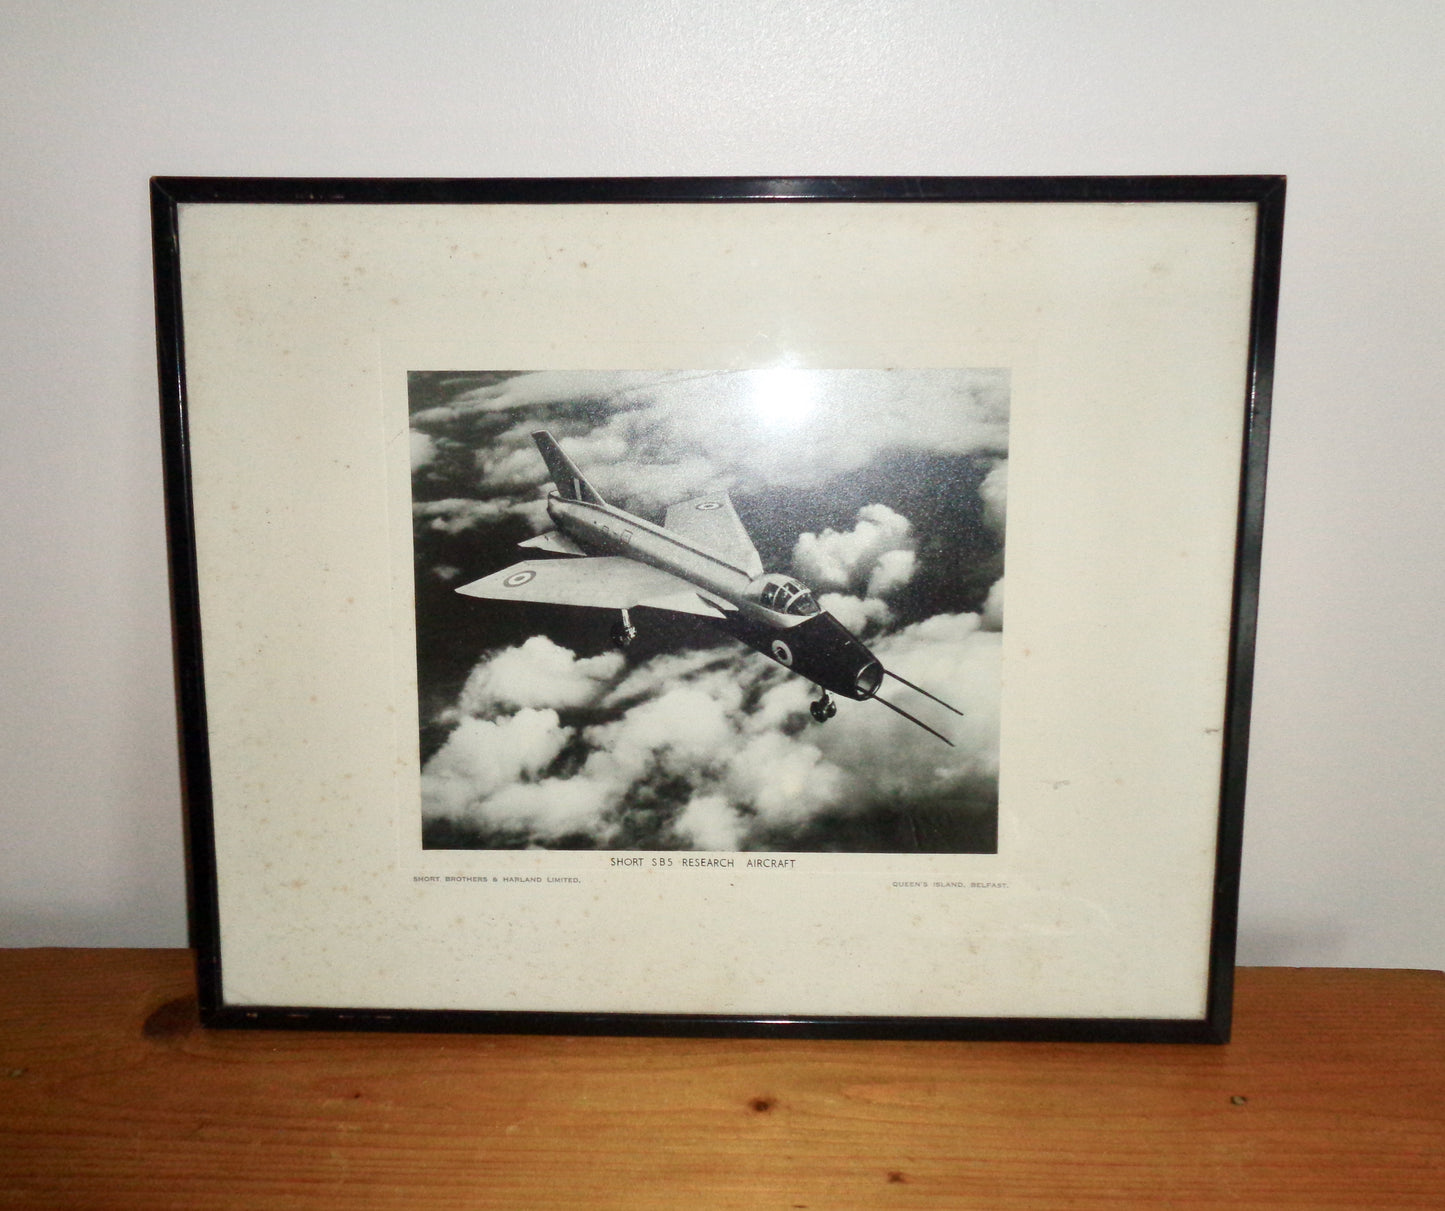 1950s Short SB5 Research Aircraft Framed Monochrome Photograph